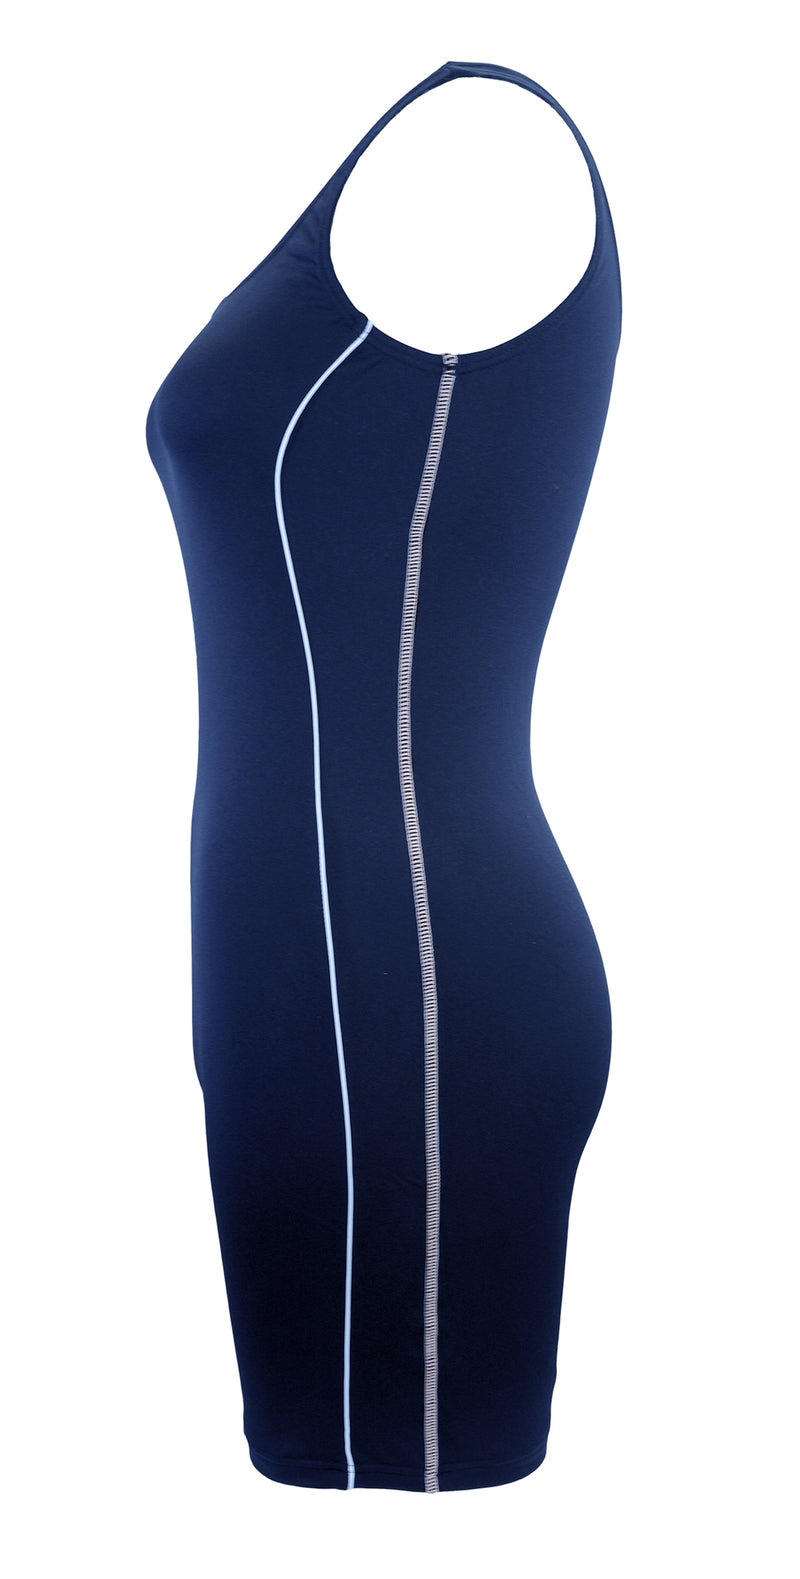 Adoretex Women's Polyester Unitard Swimsuit (FP003)